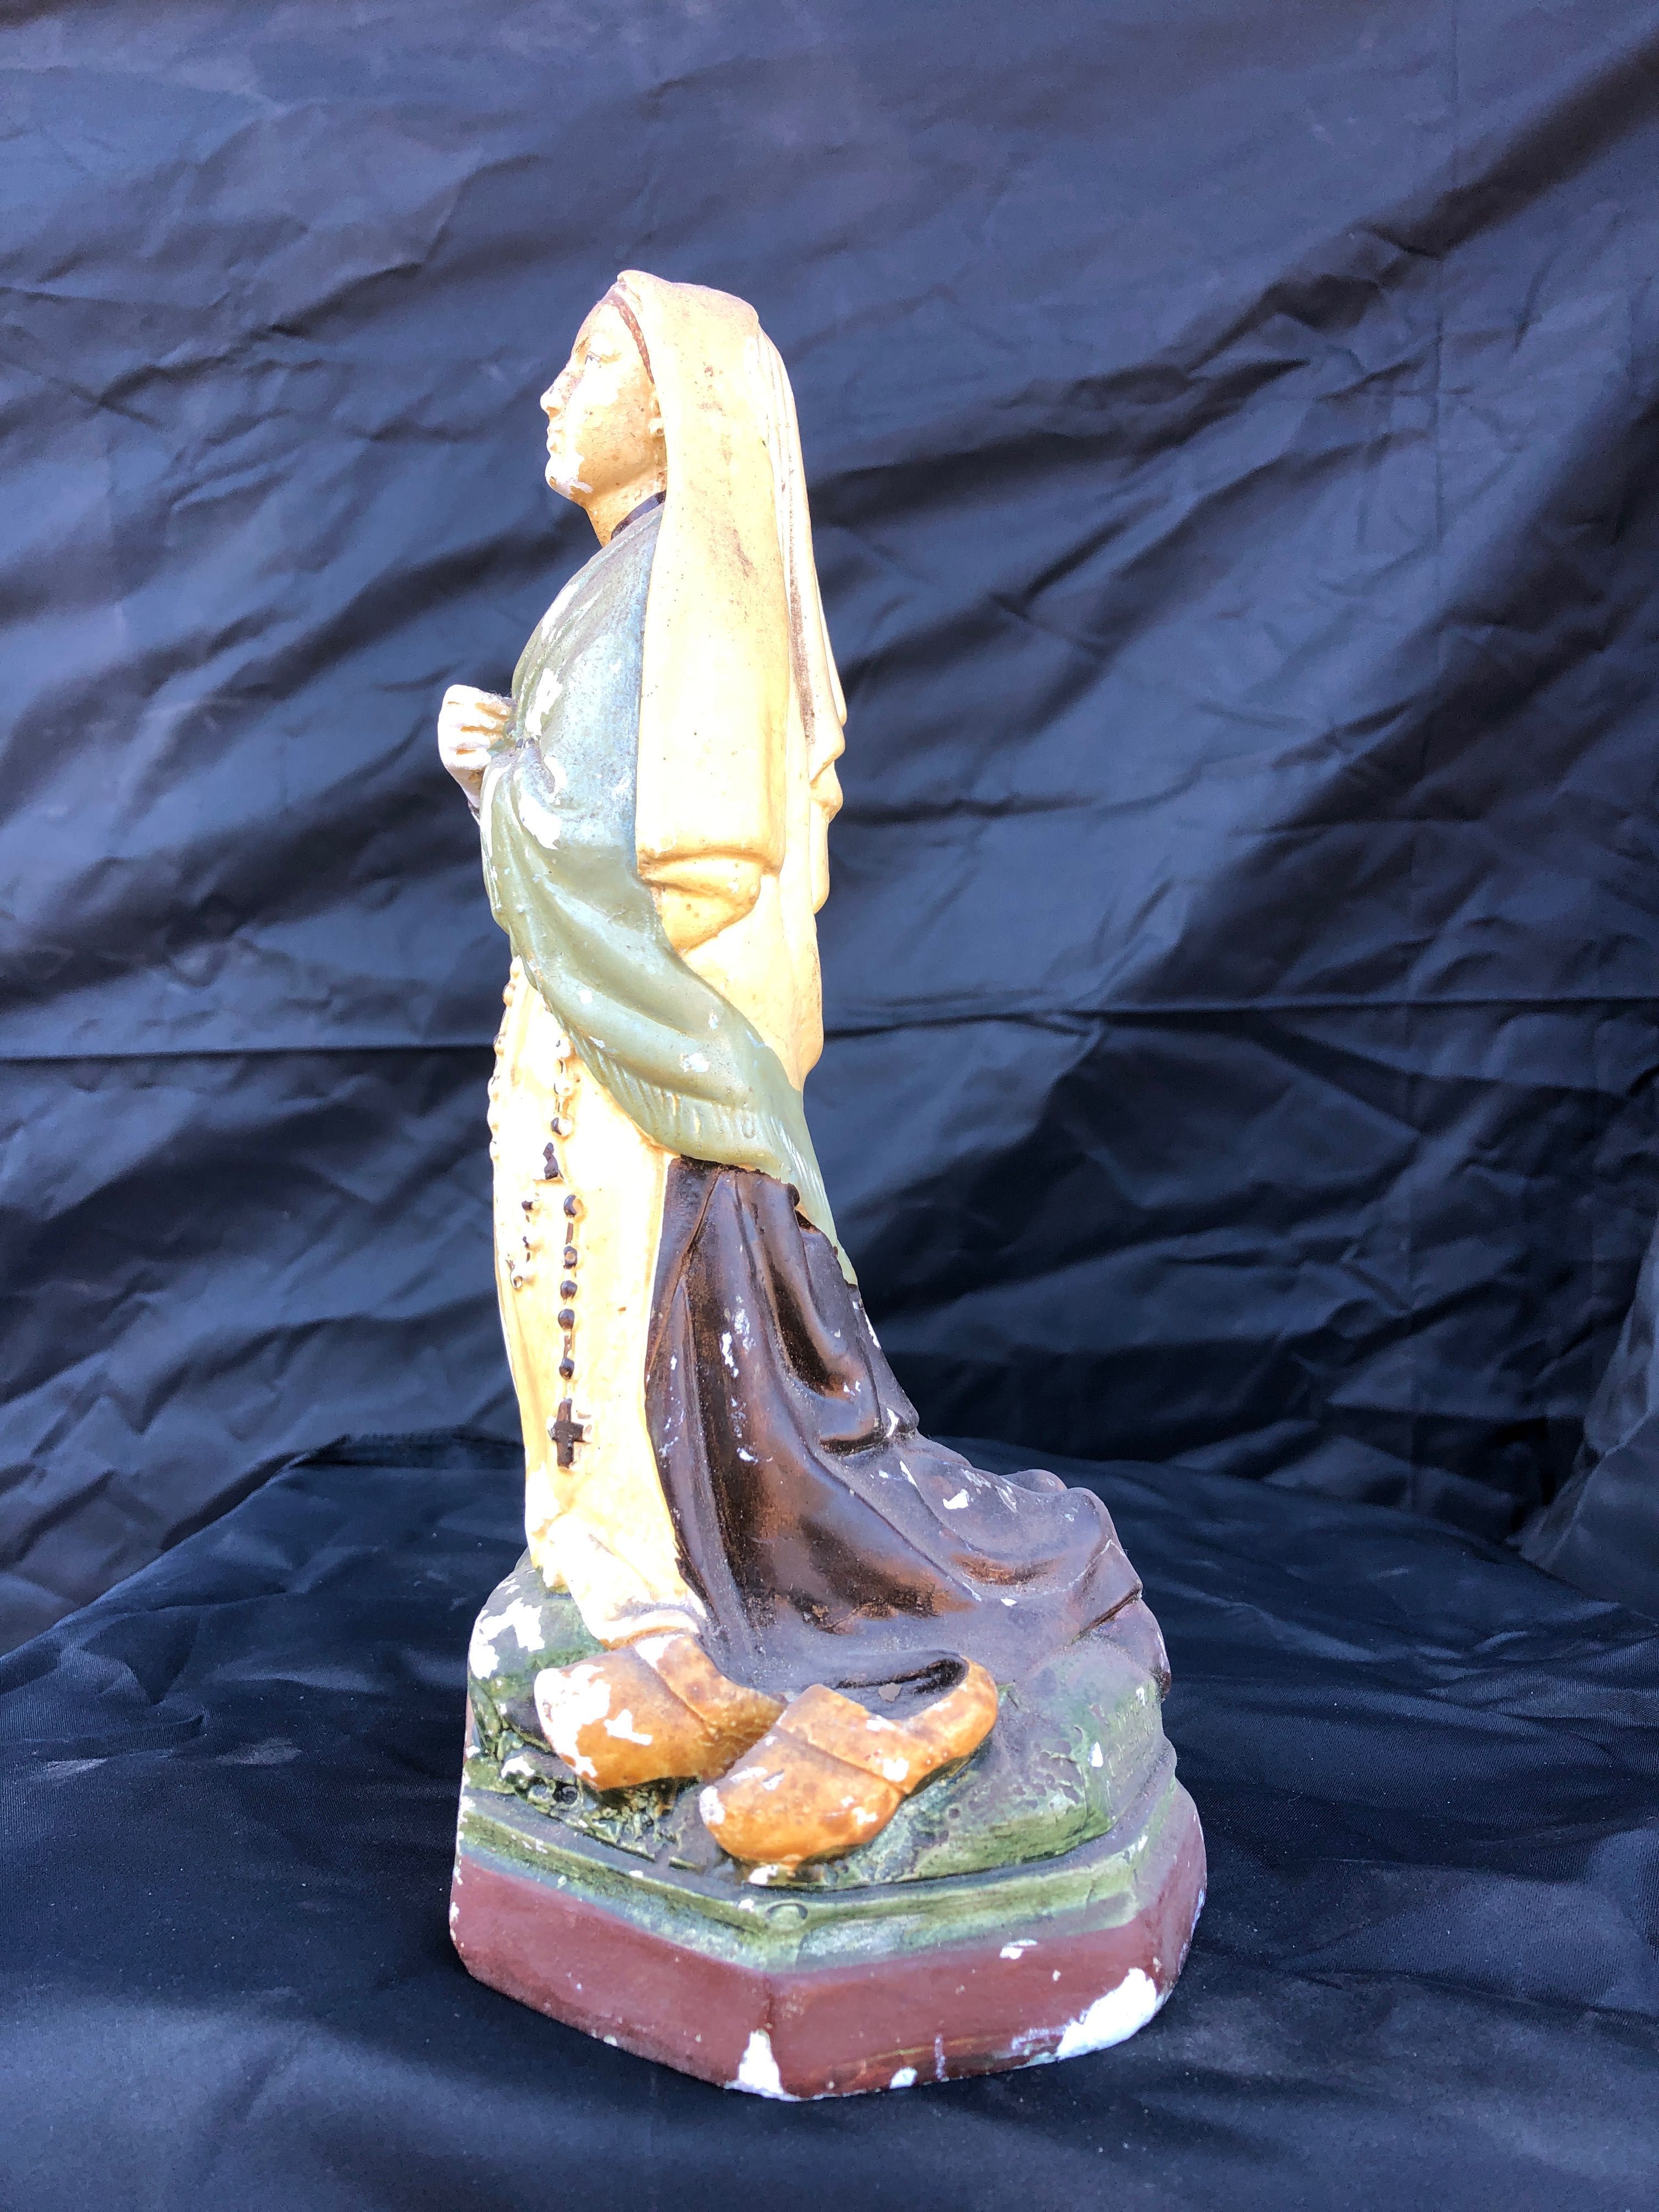 Sygnowana Stara figurka gipsowa Lourdes